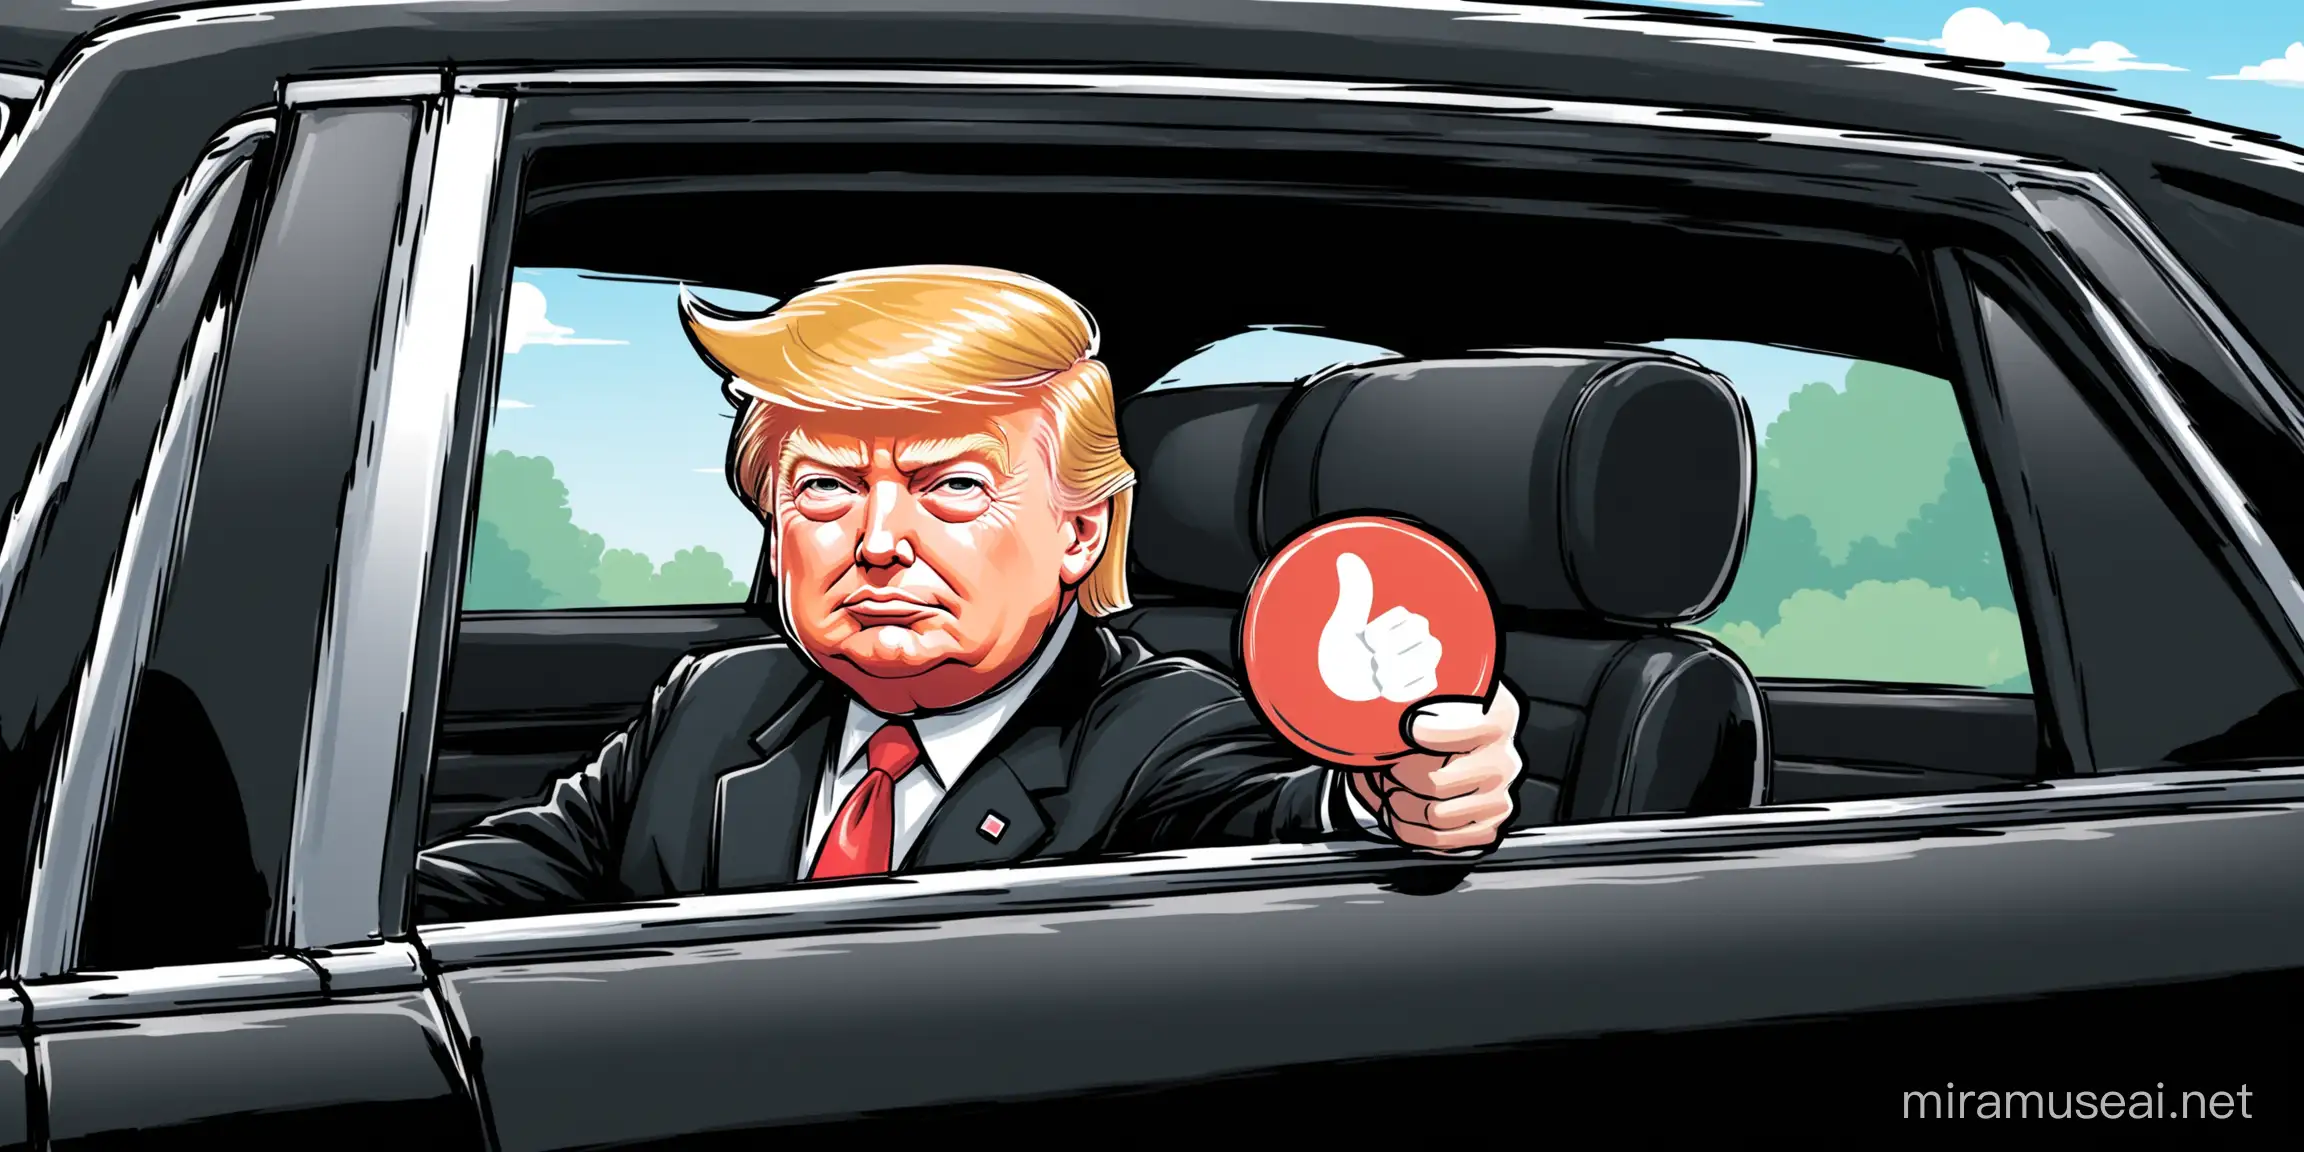 Cartoon President in Black Car Holding Like Button